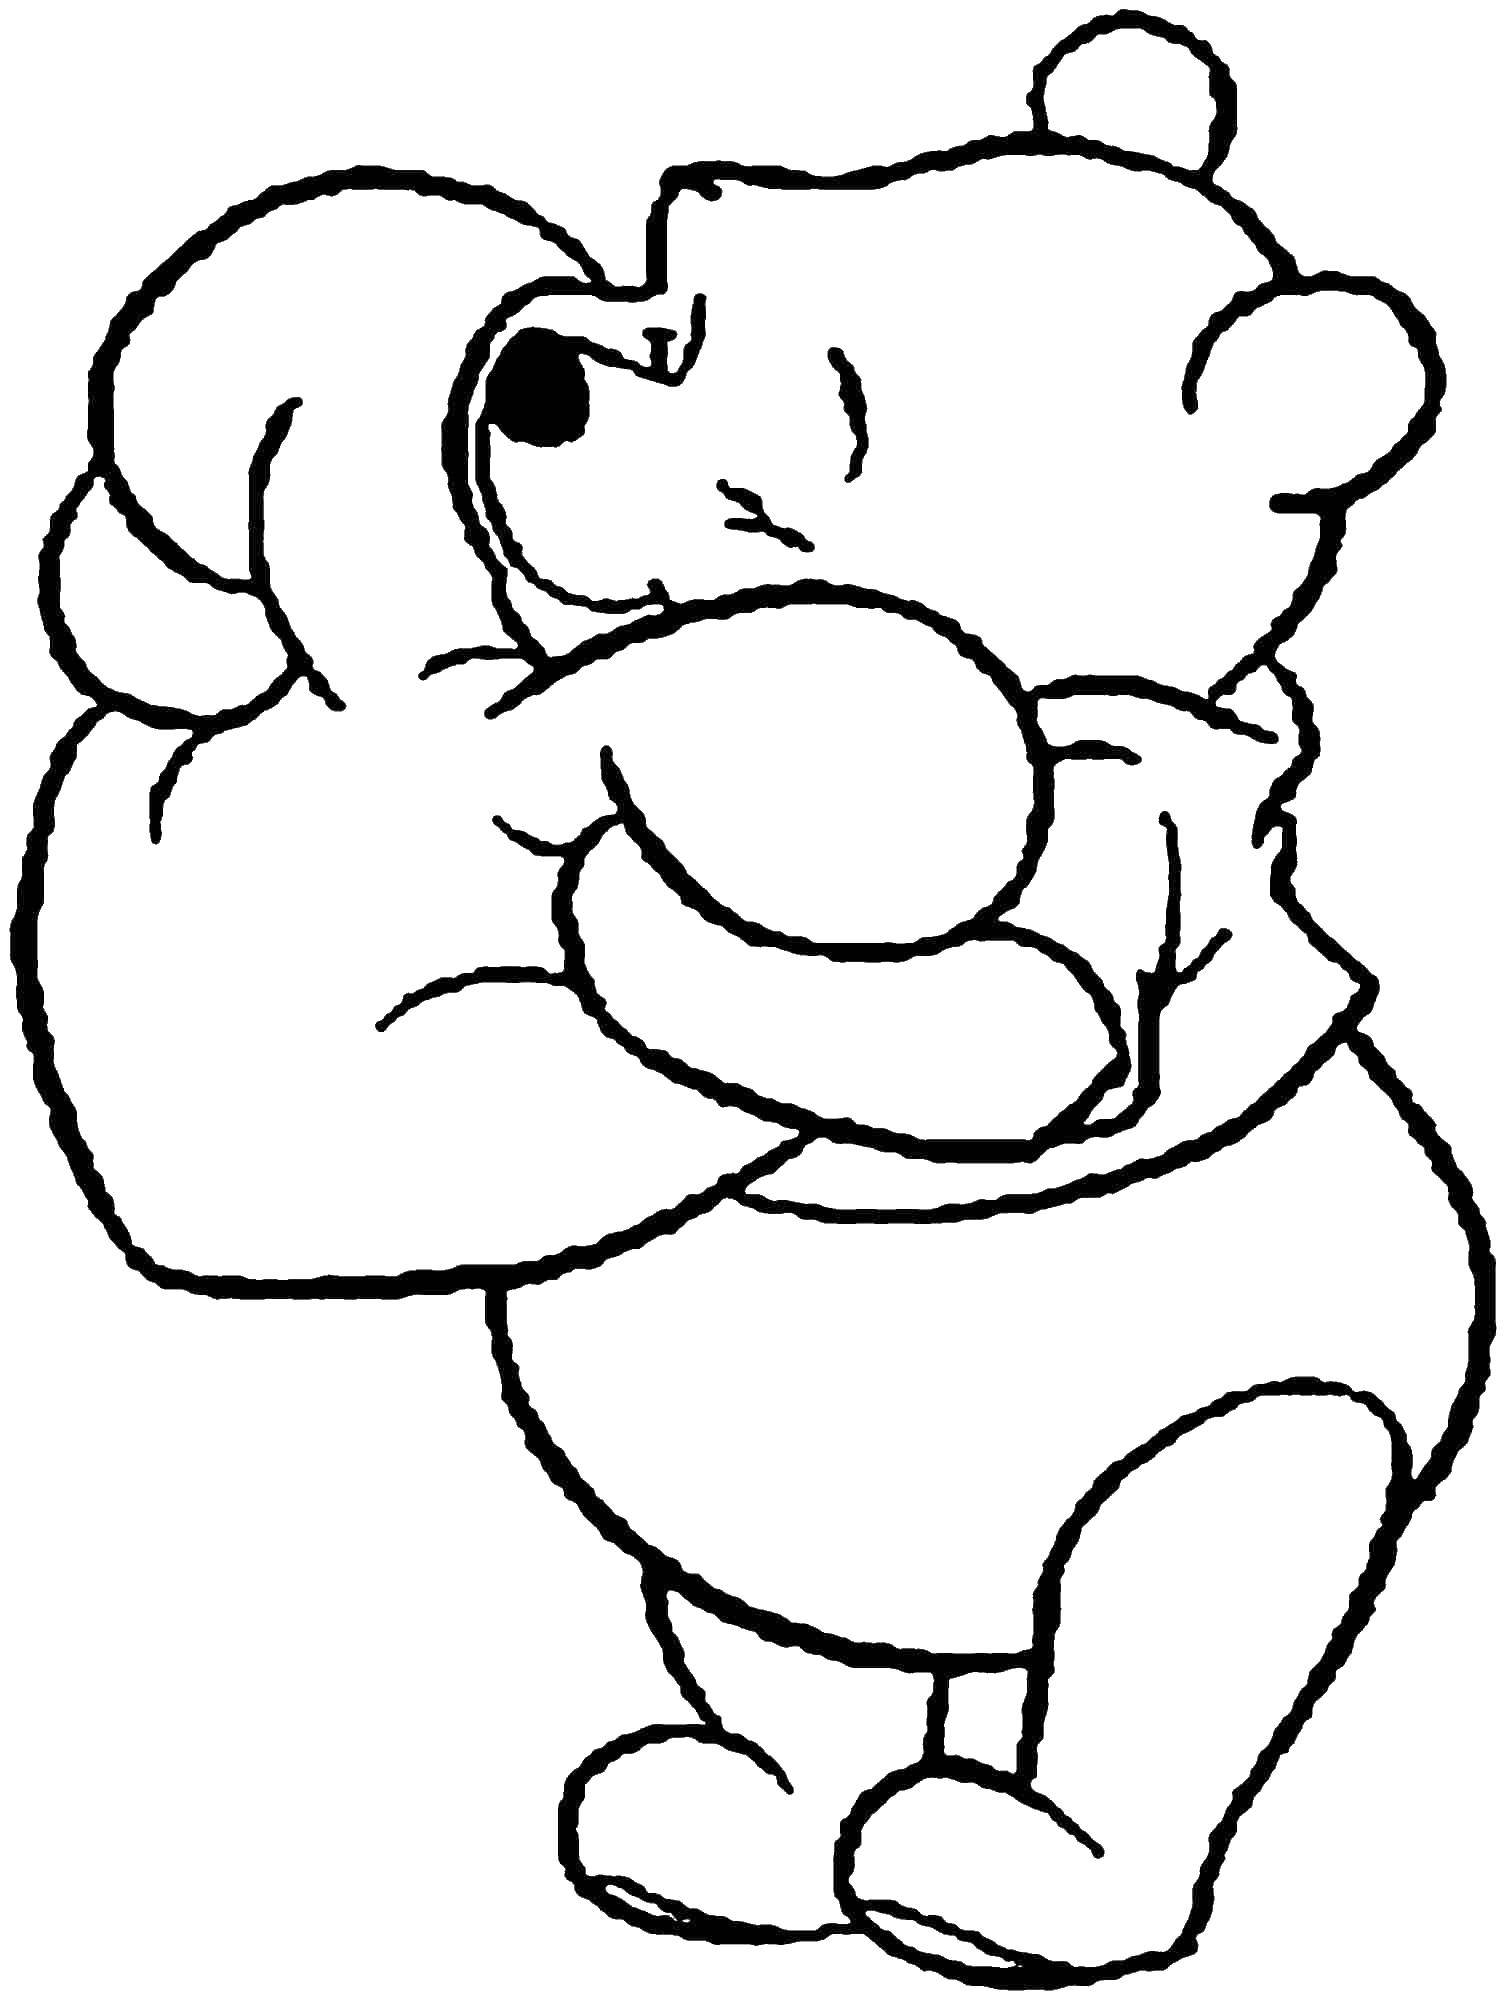 Раскраски из мультфильма Винни Пух (Winnie the Pooh)